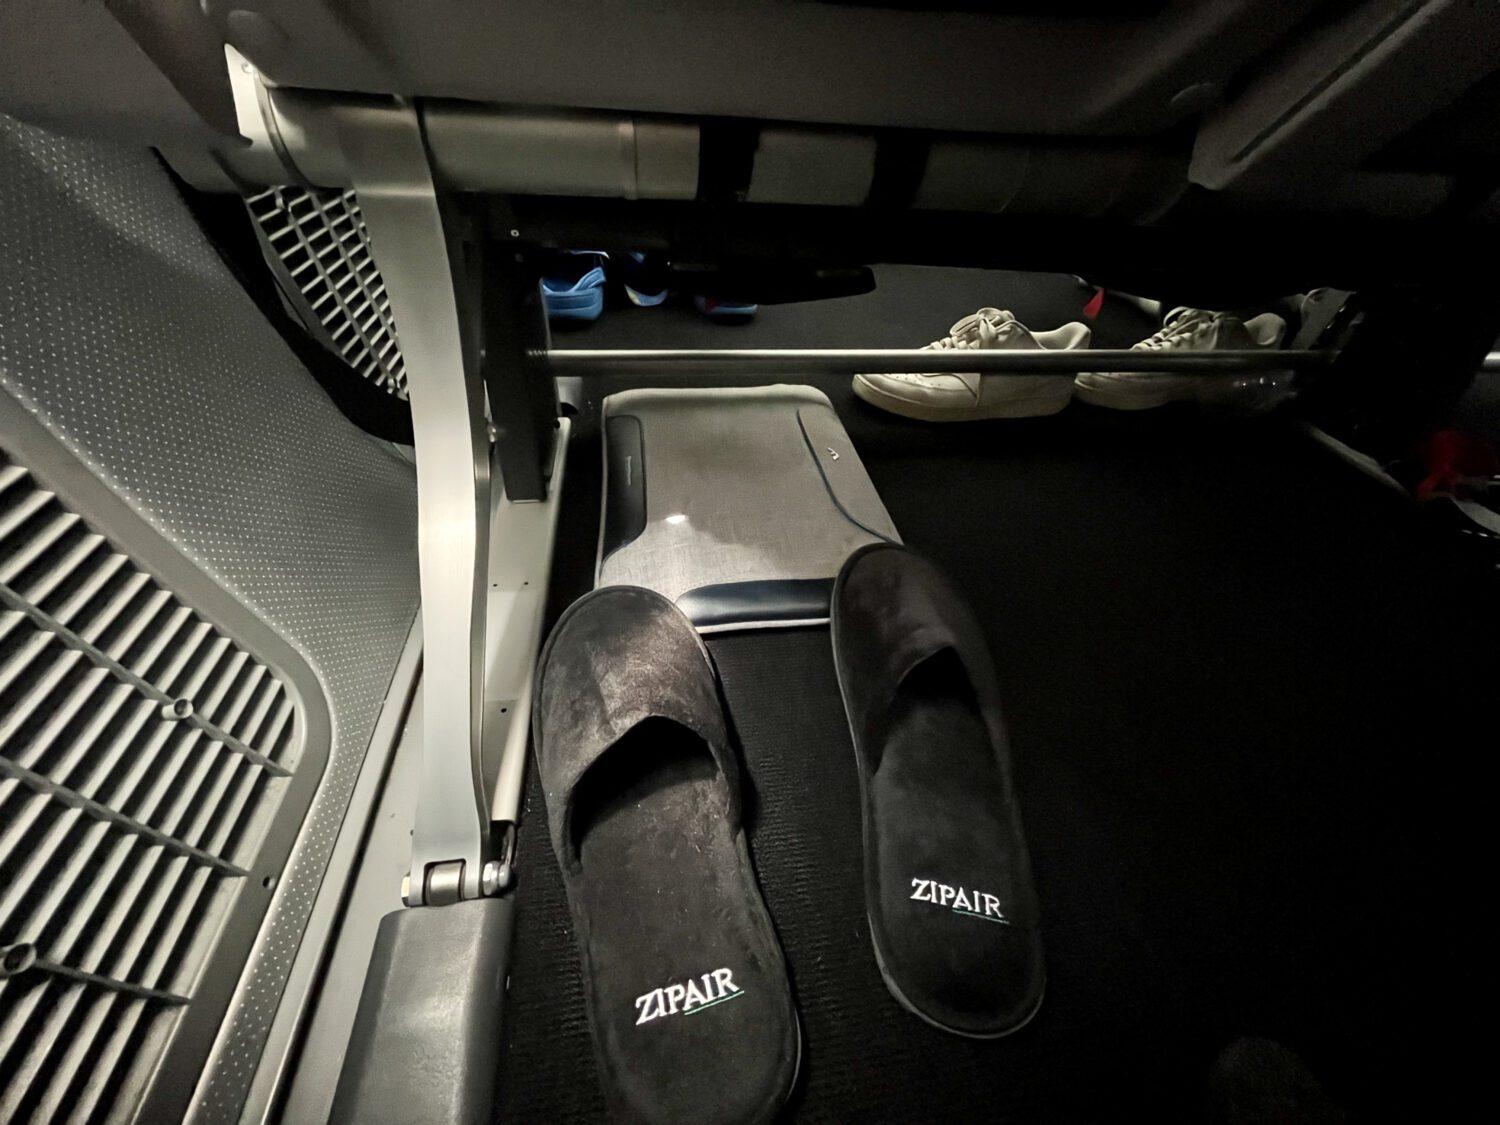 Zipair slippers under seat